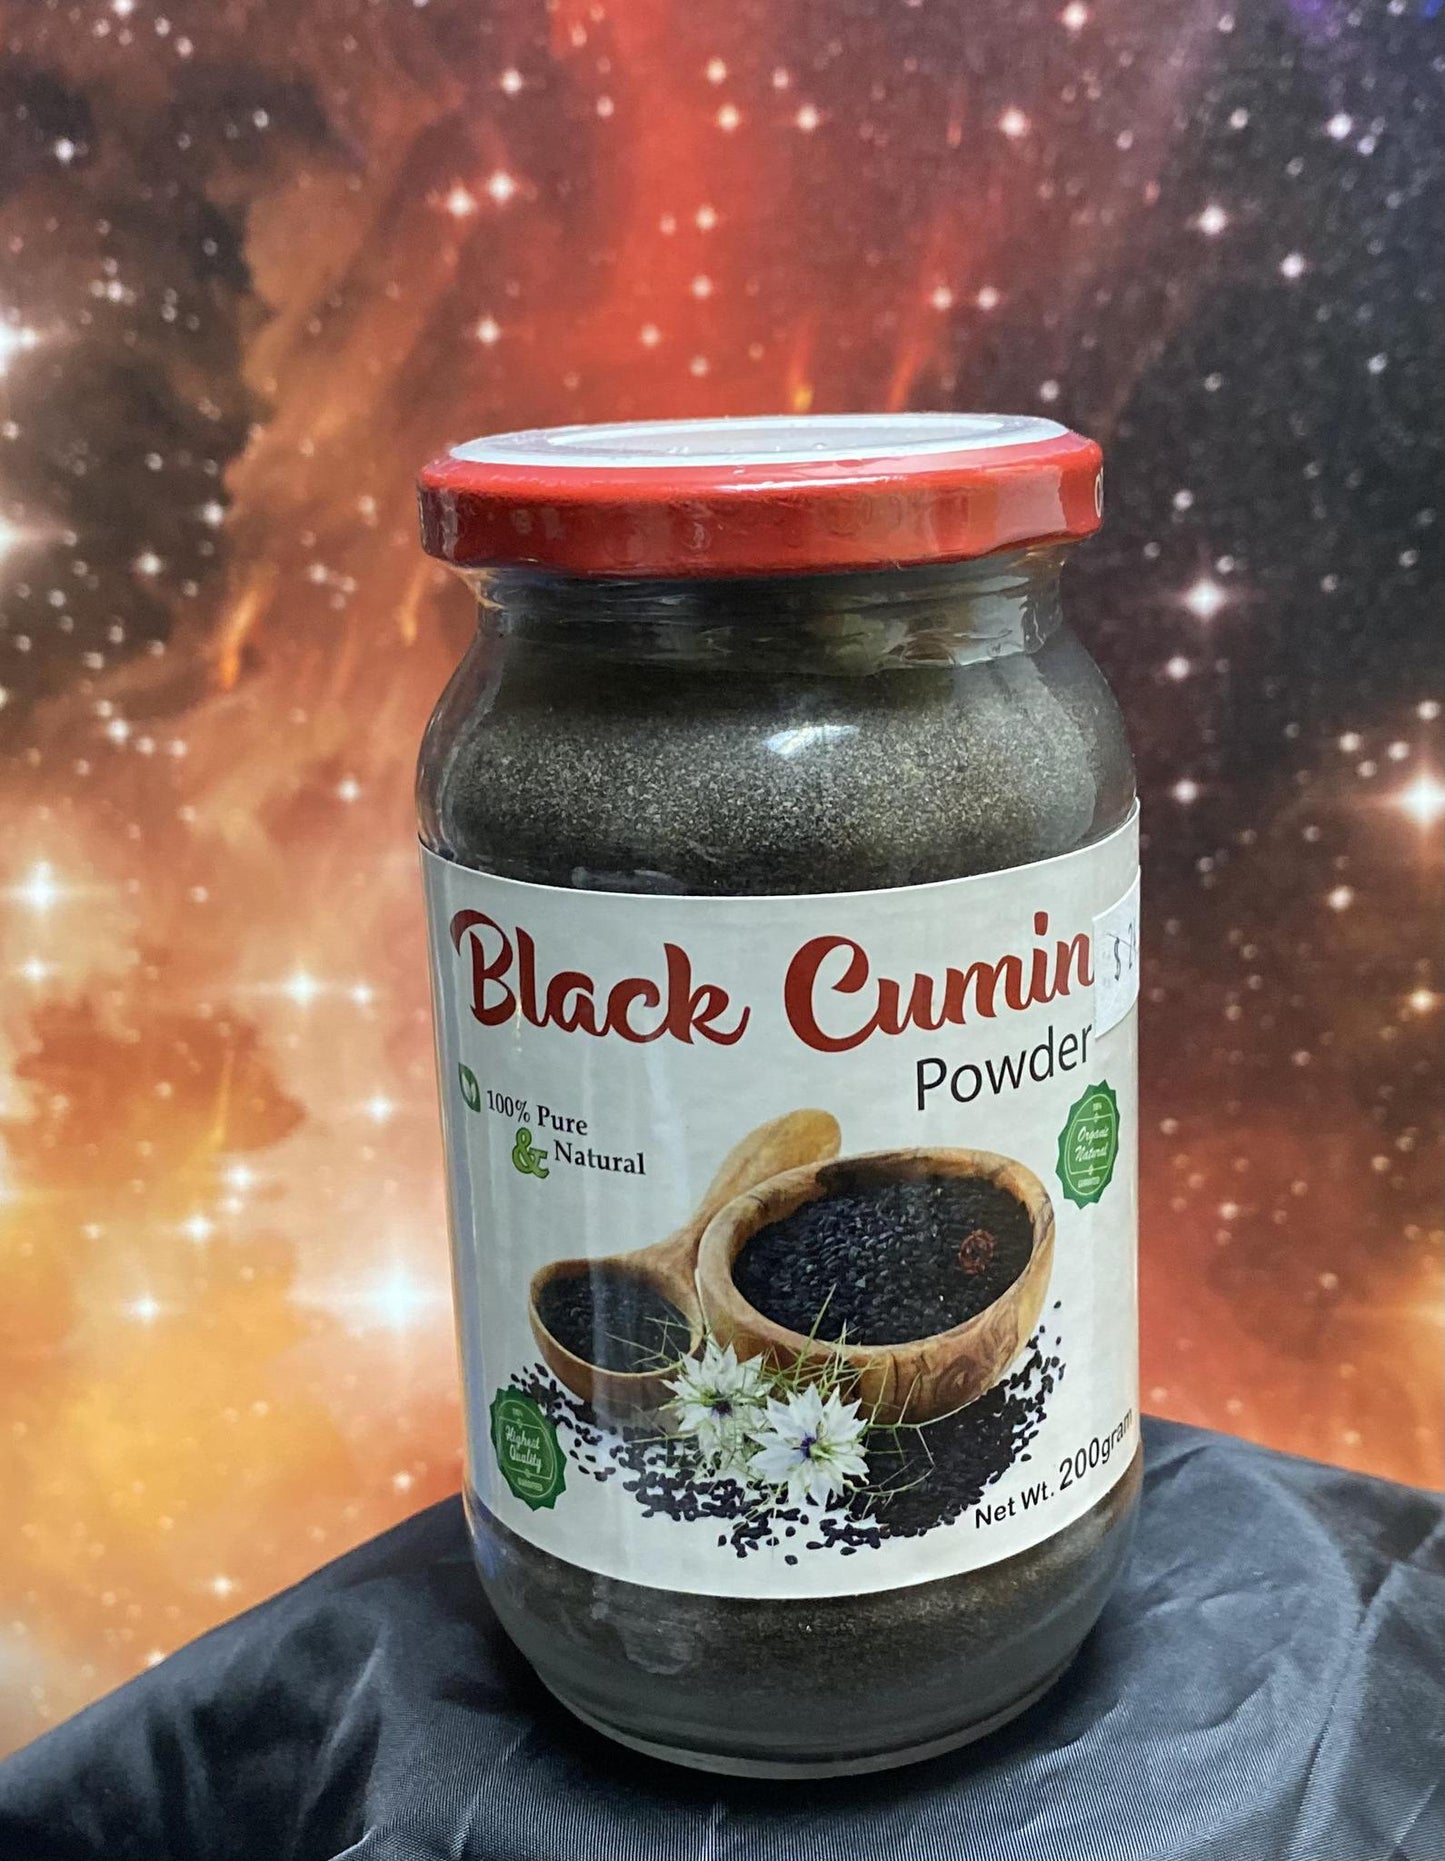 Black Cumin Powder